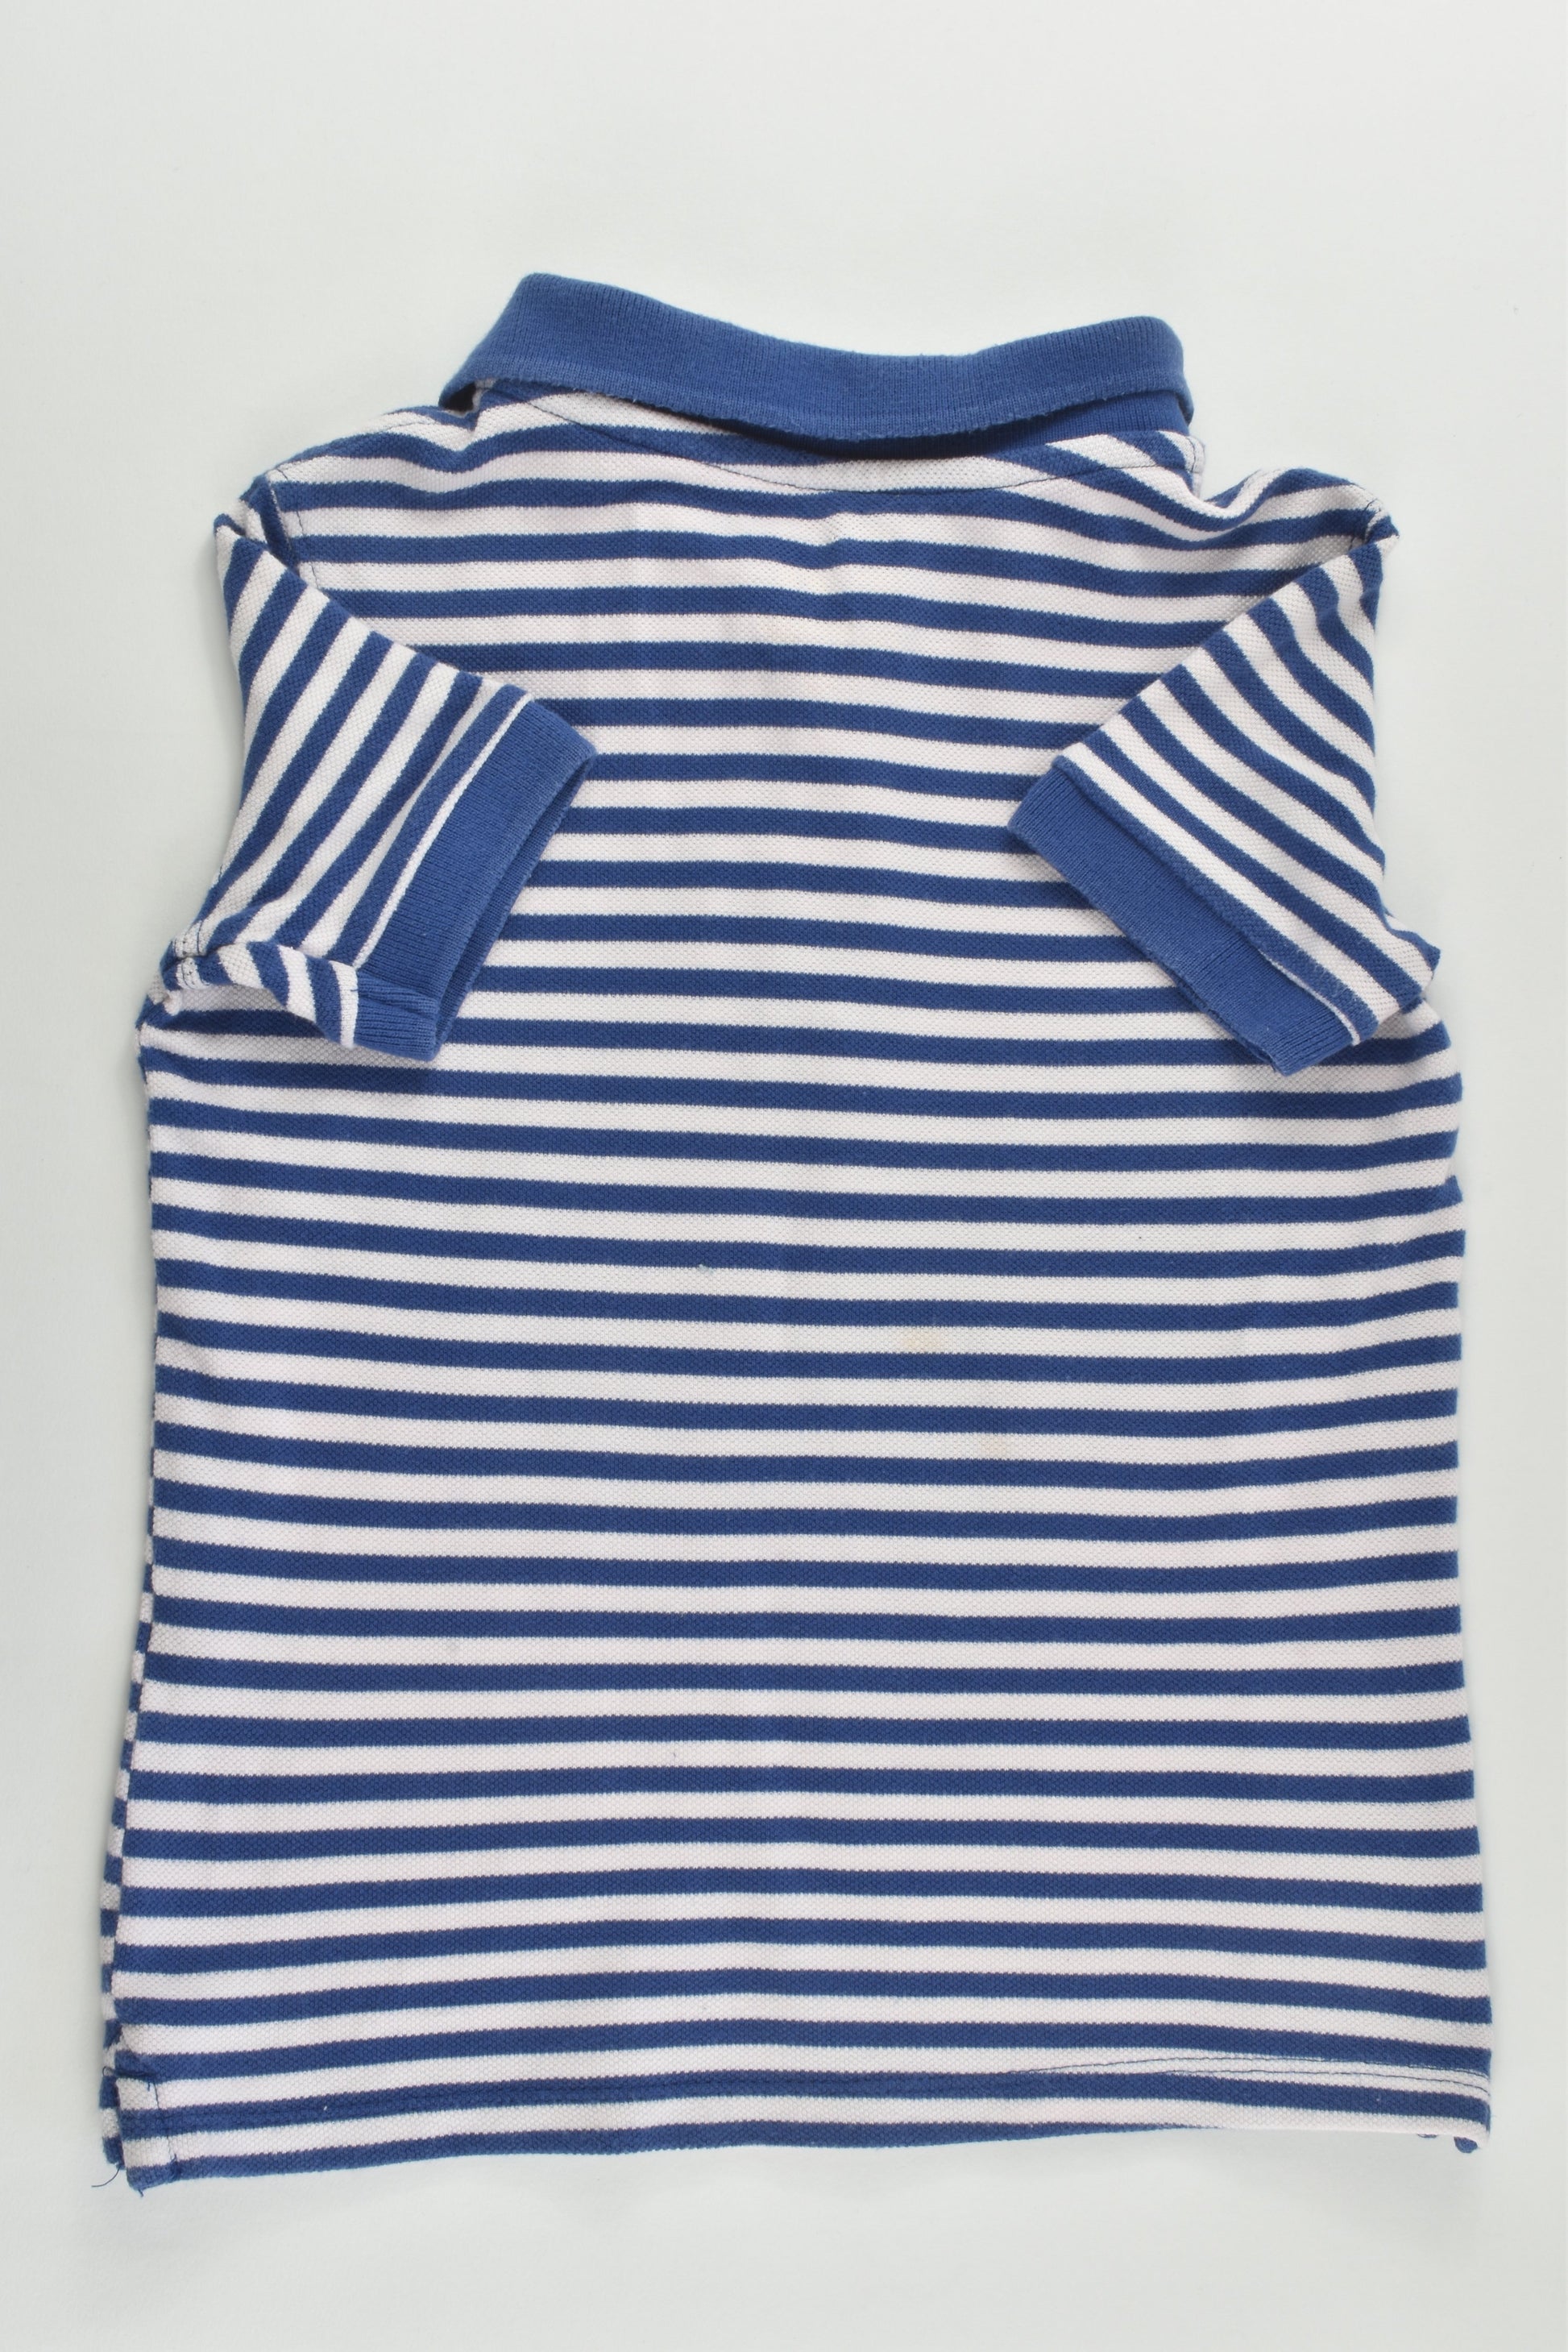 Cotton On Kids Size 4 Striped Lighting Polo Shirt